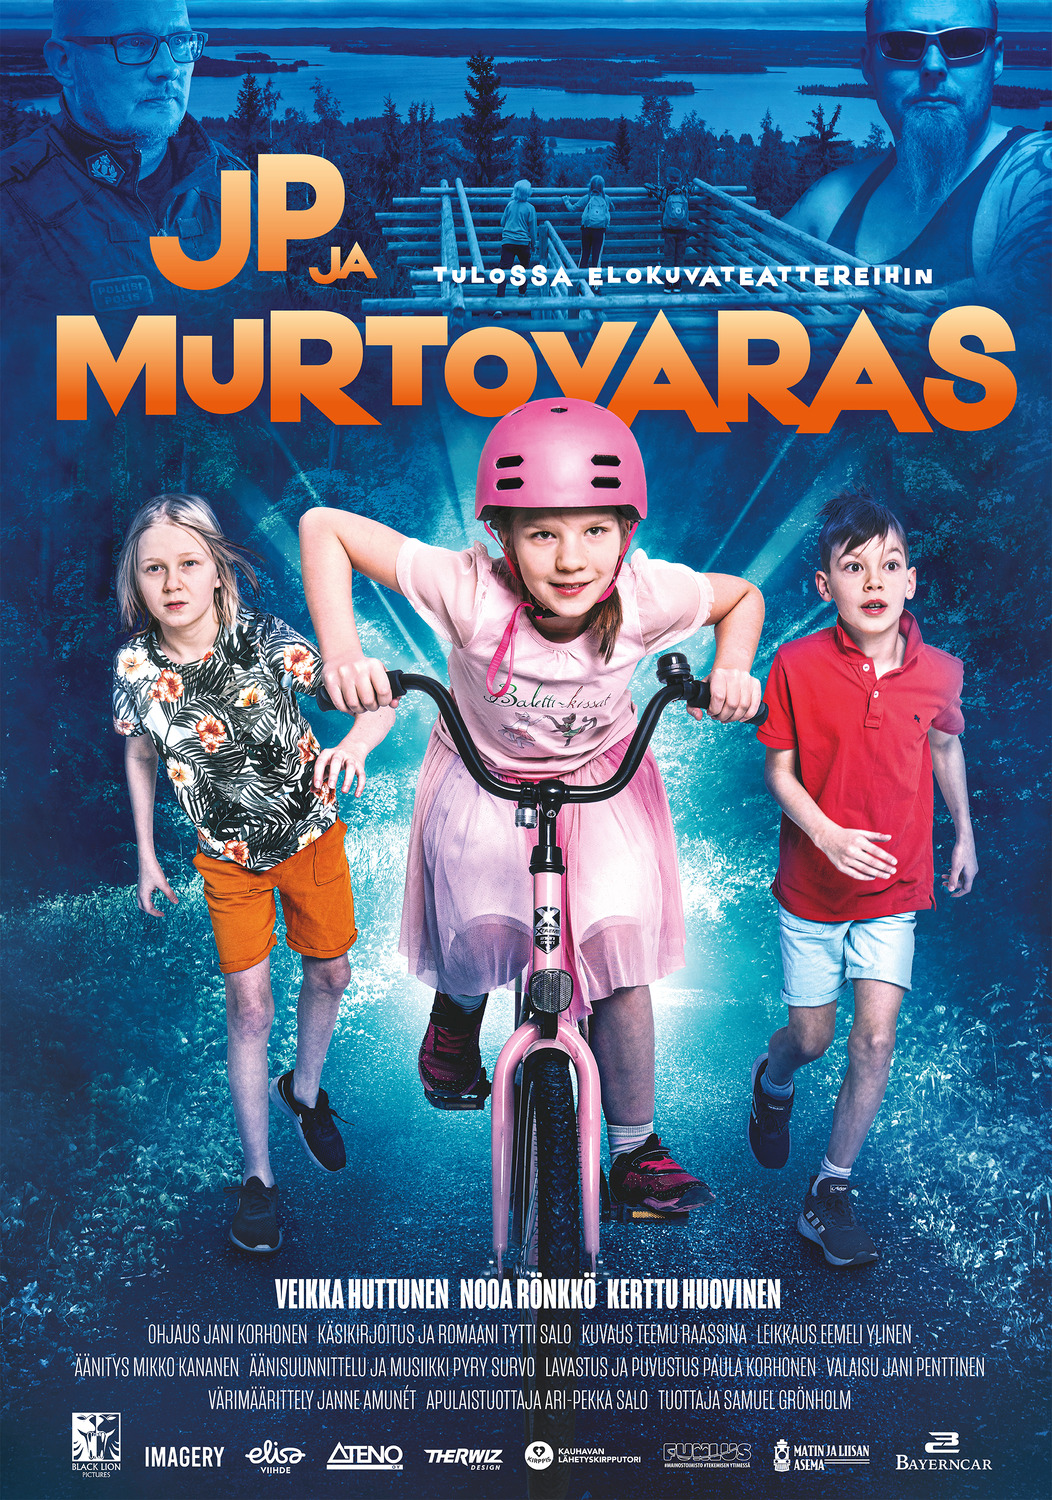 Extra Large Movie Poster Image for JP ja murtovaras 